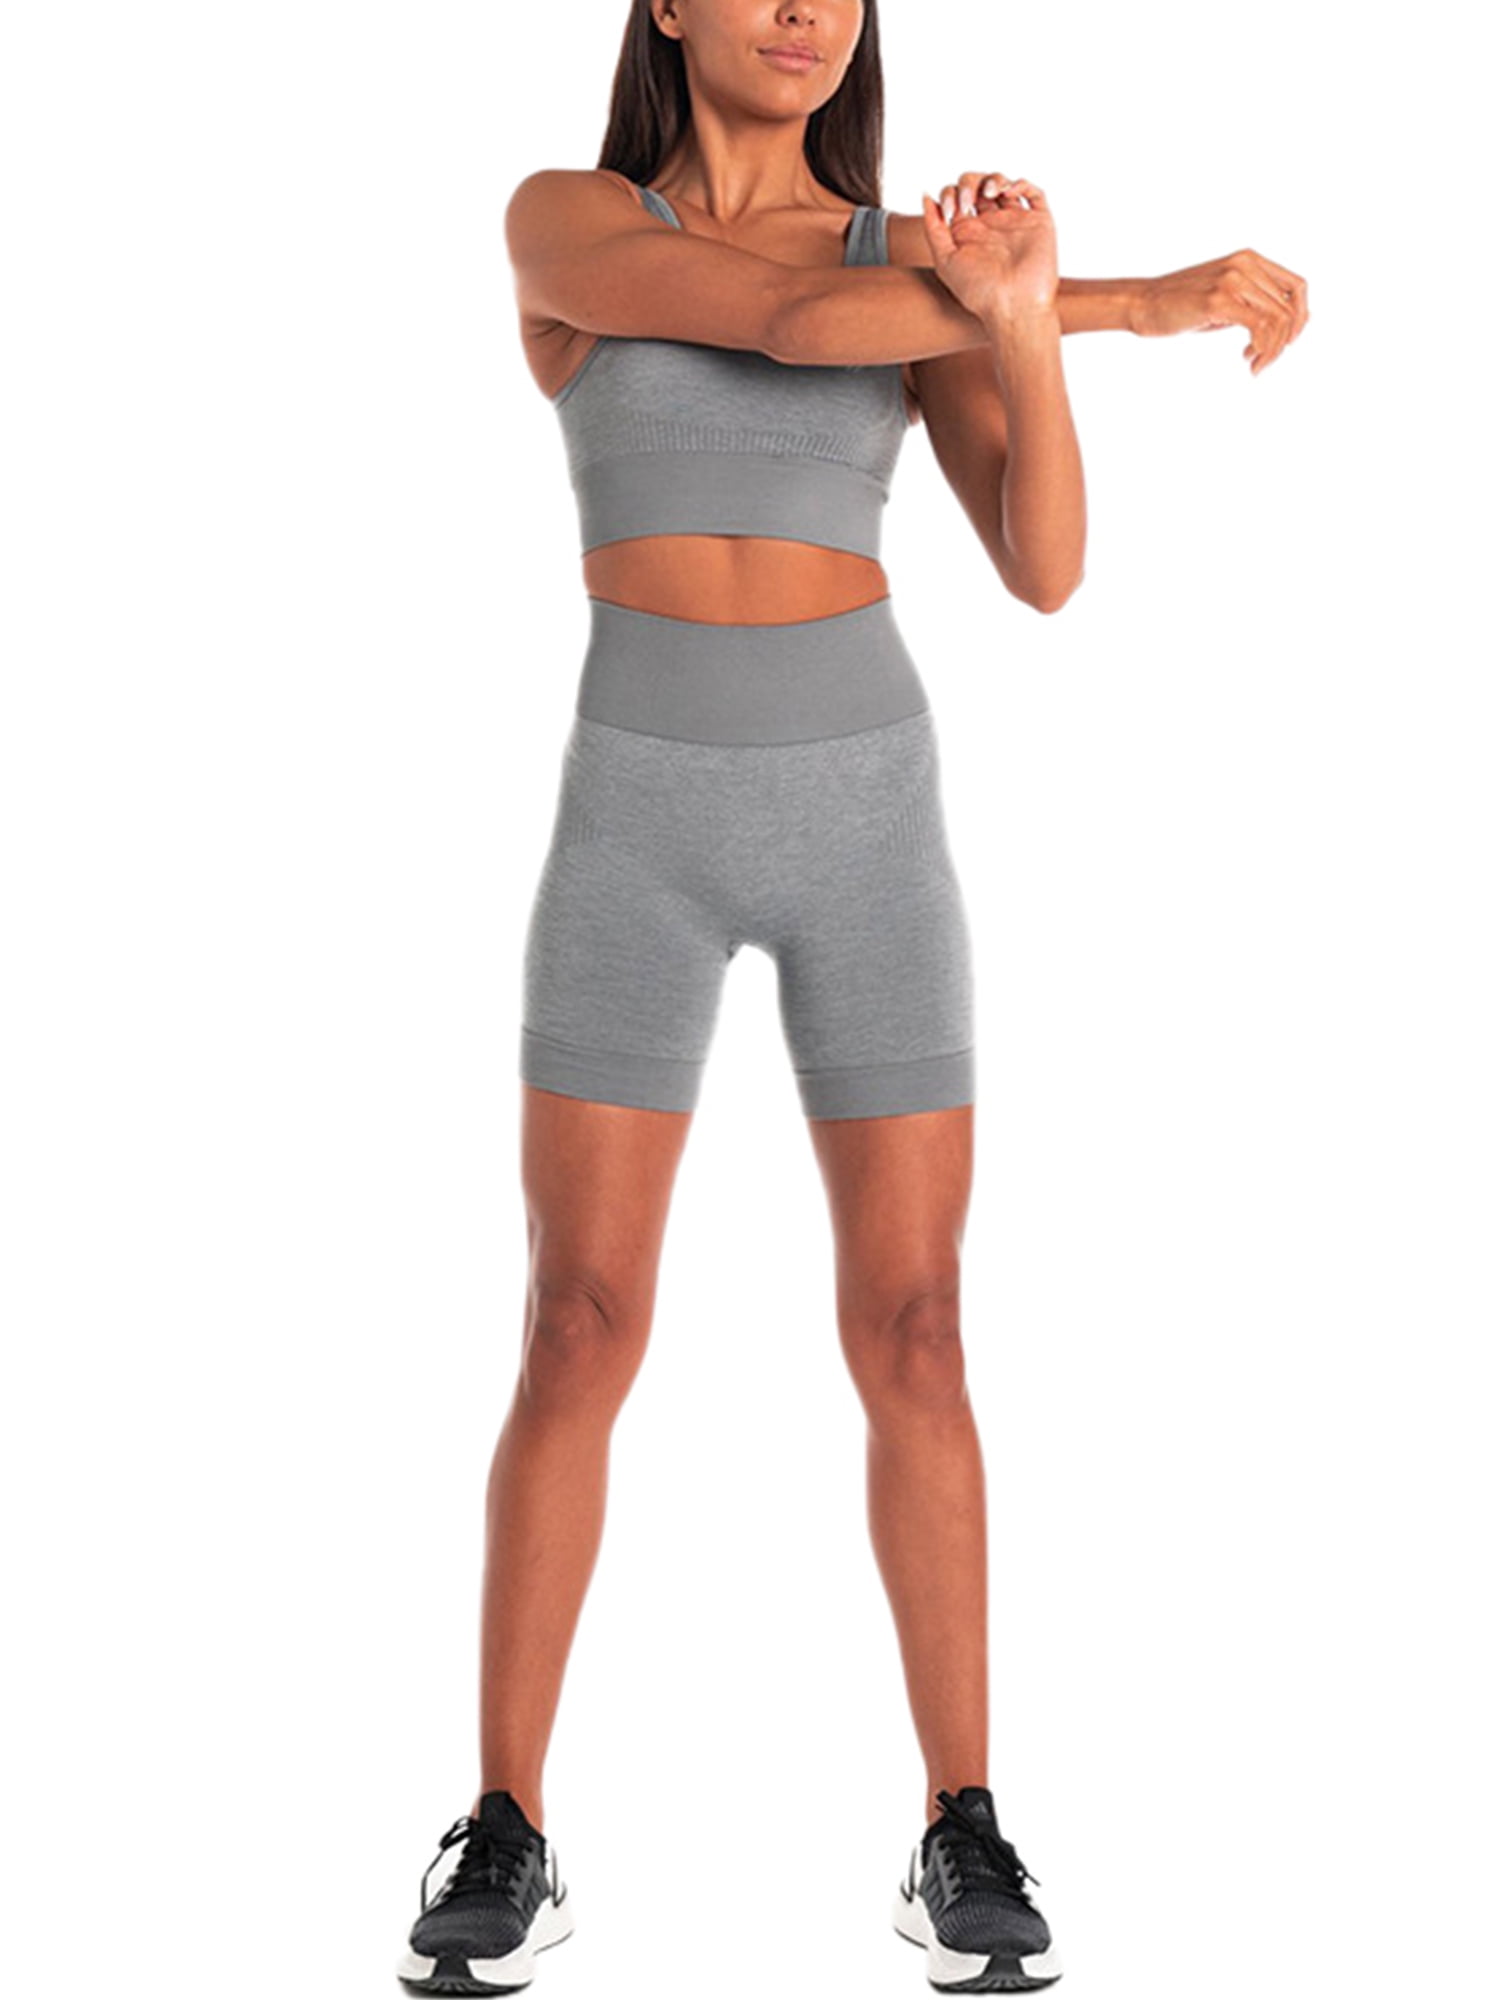 KLGDA Womens Active Wear Fitness Yoga Exercise Stretch Leggings Sports Bra Athletic Set Tank Top+Pant